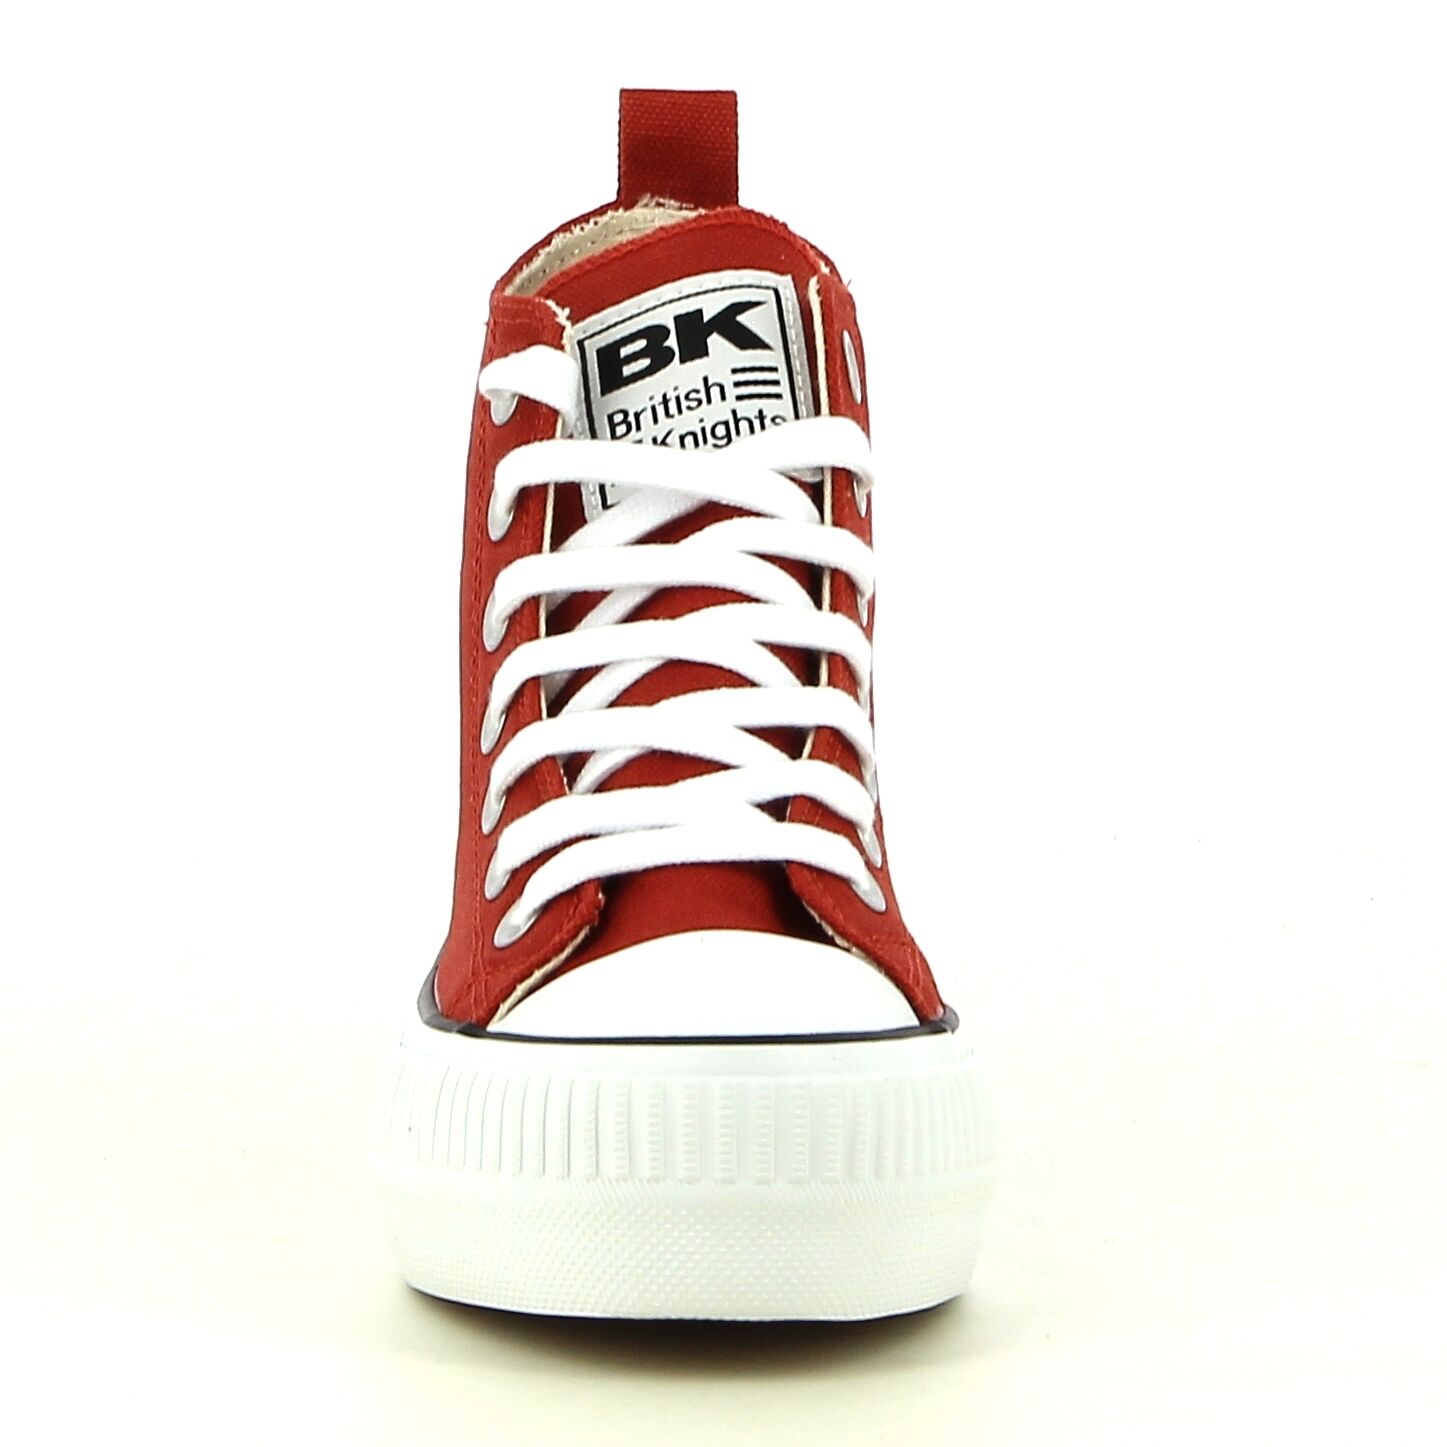 BK - Roest - Sneakers